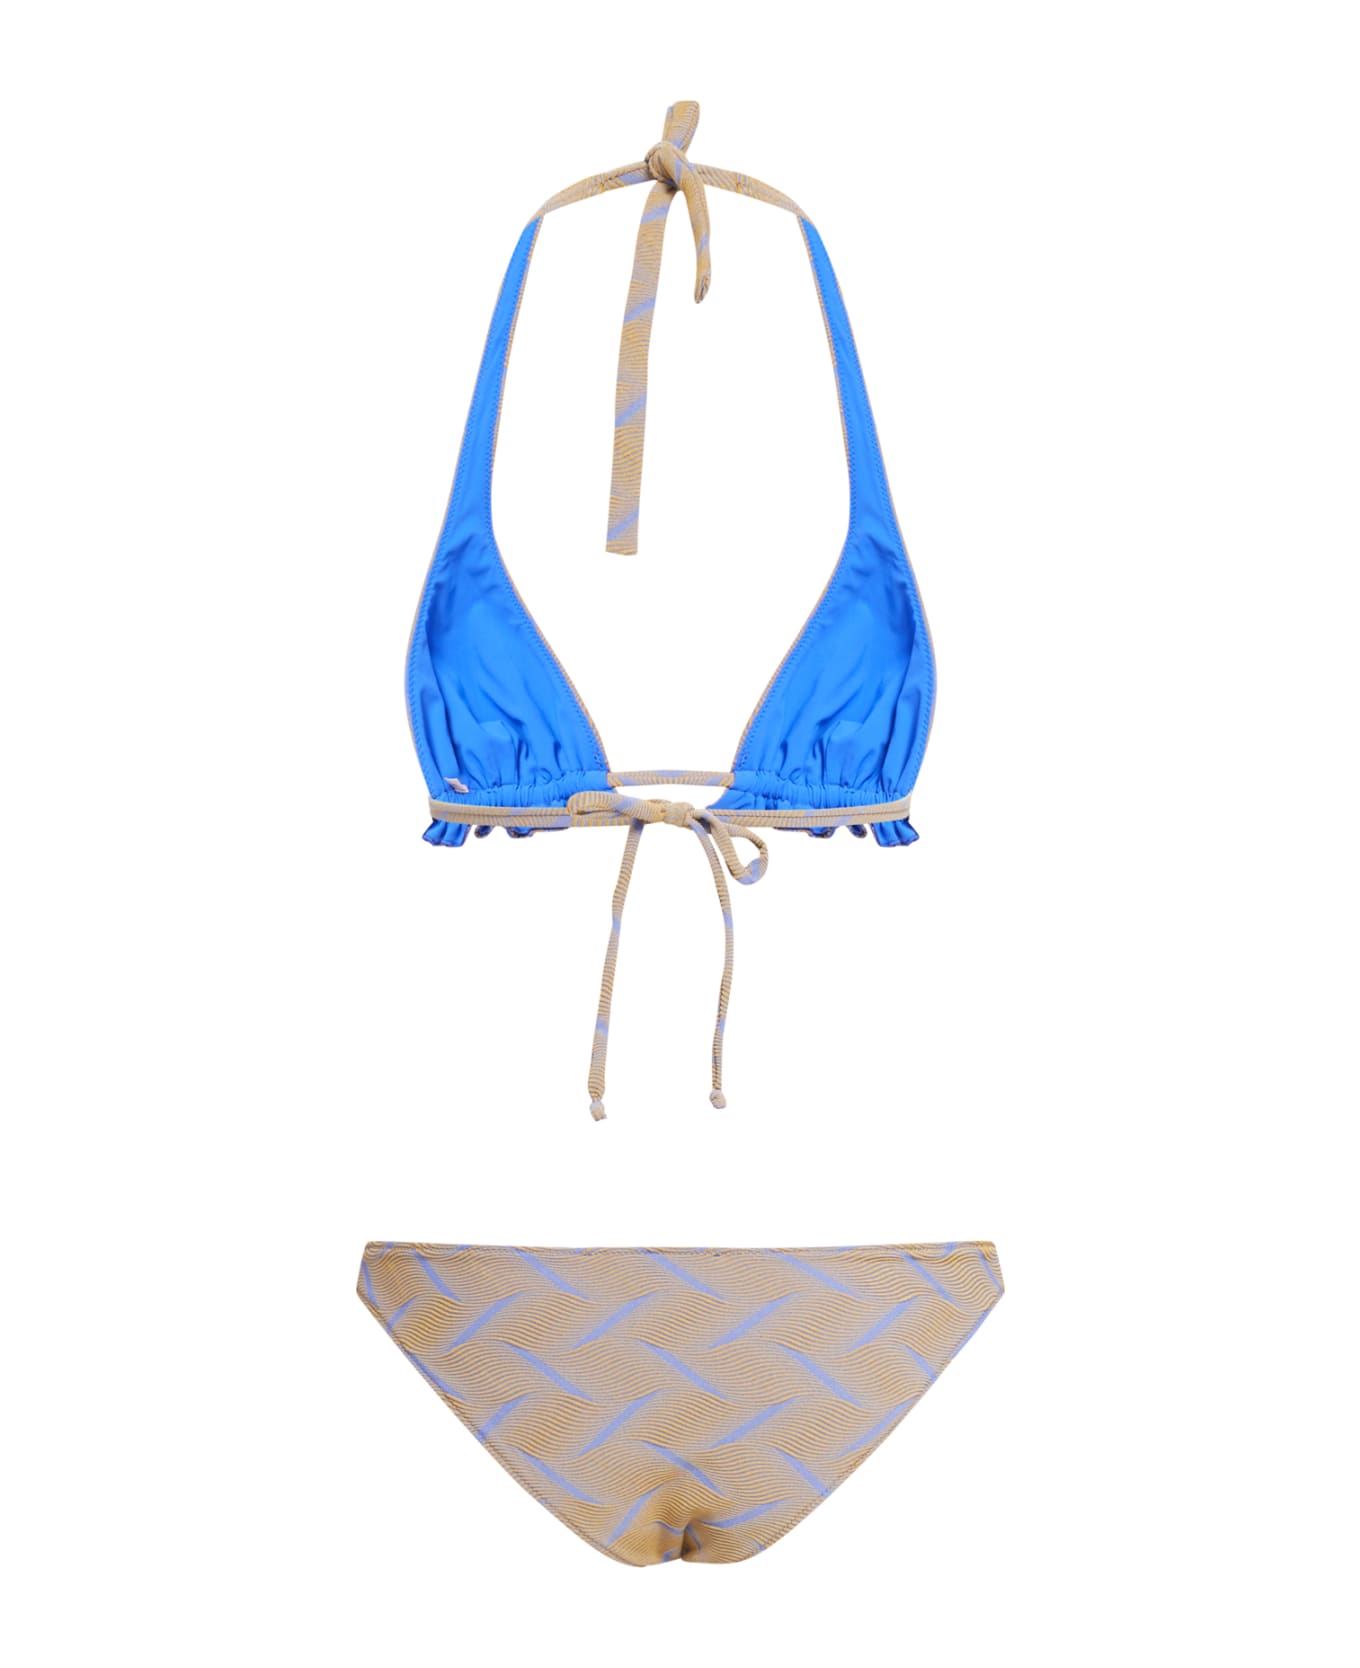 Sucrette Bikini - Onde Bluette